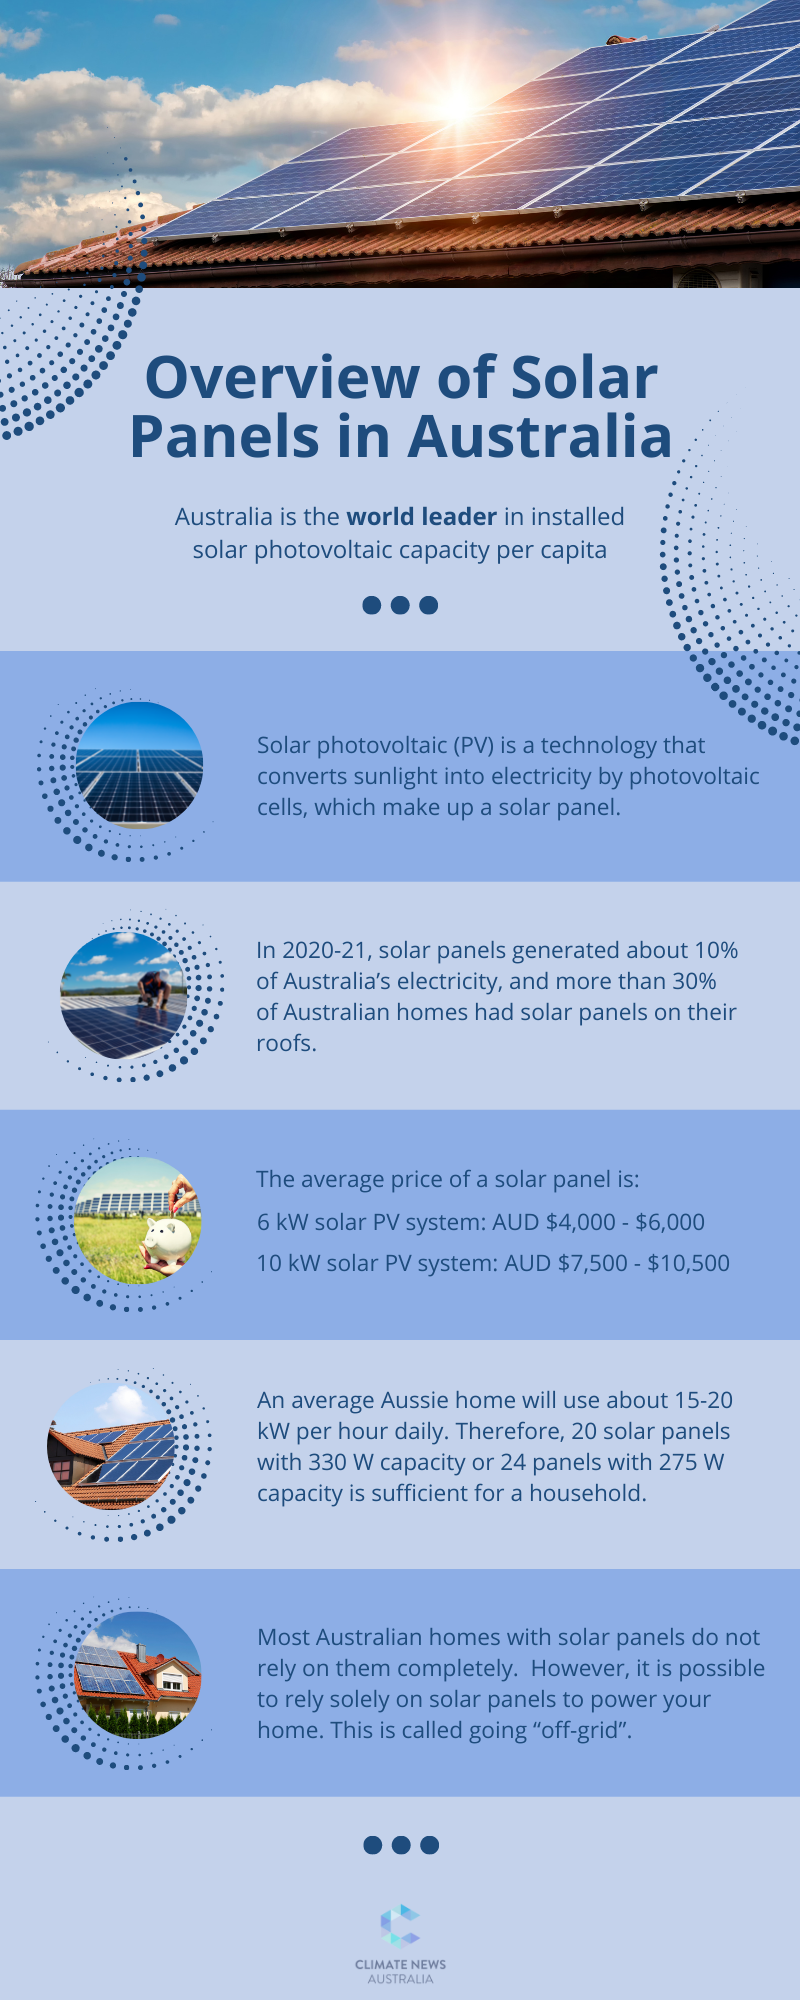 Overview of Solar Panels in Australia